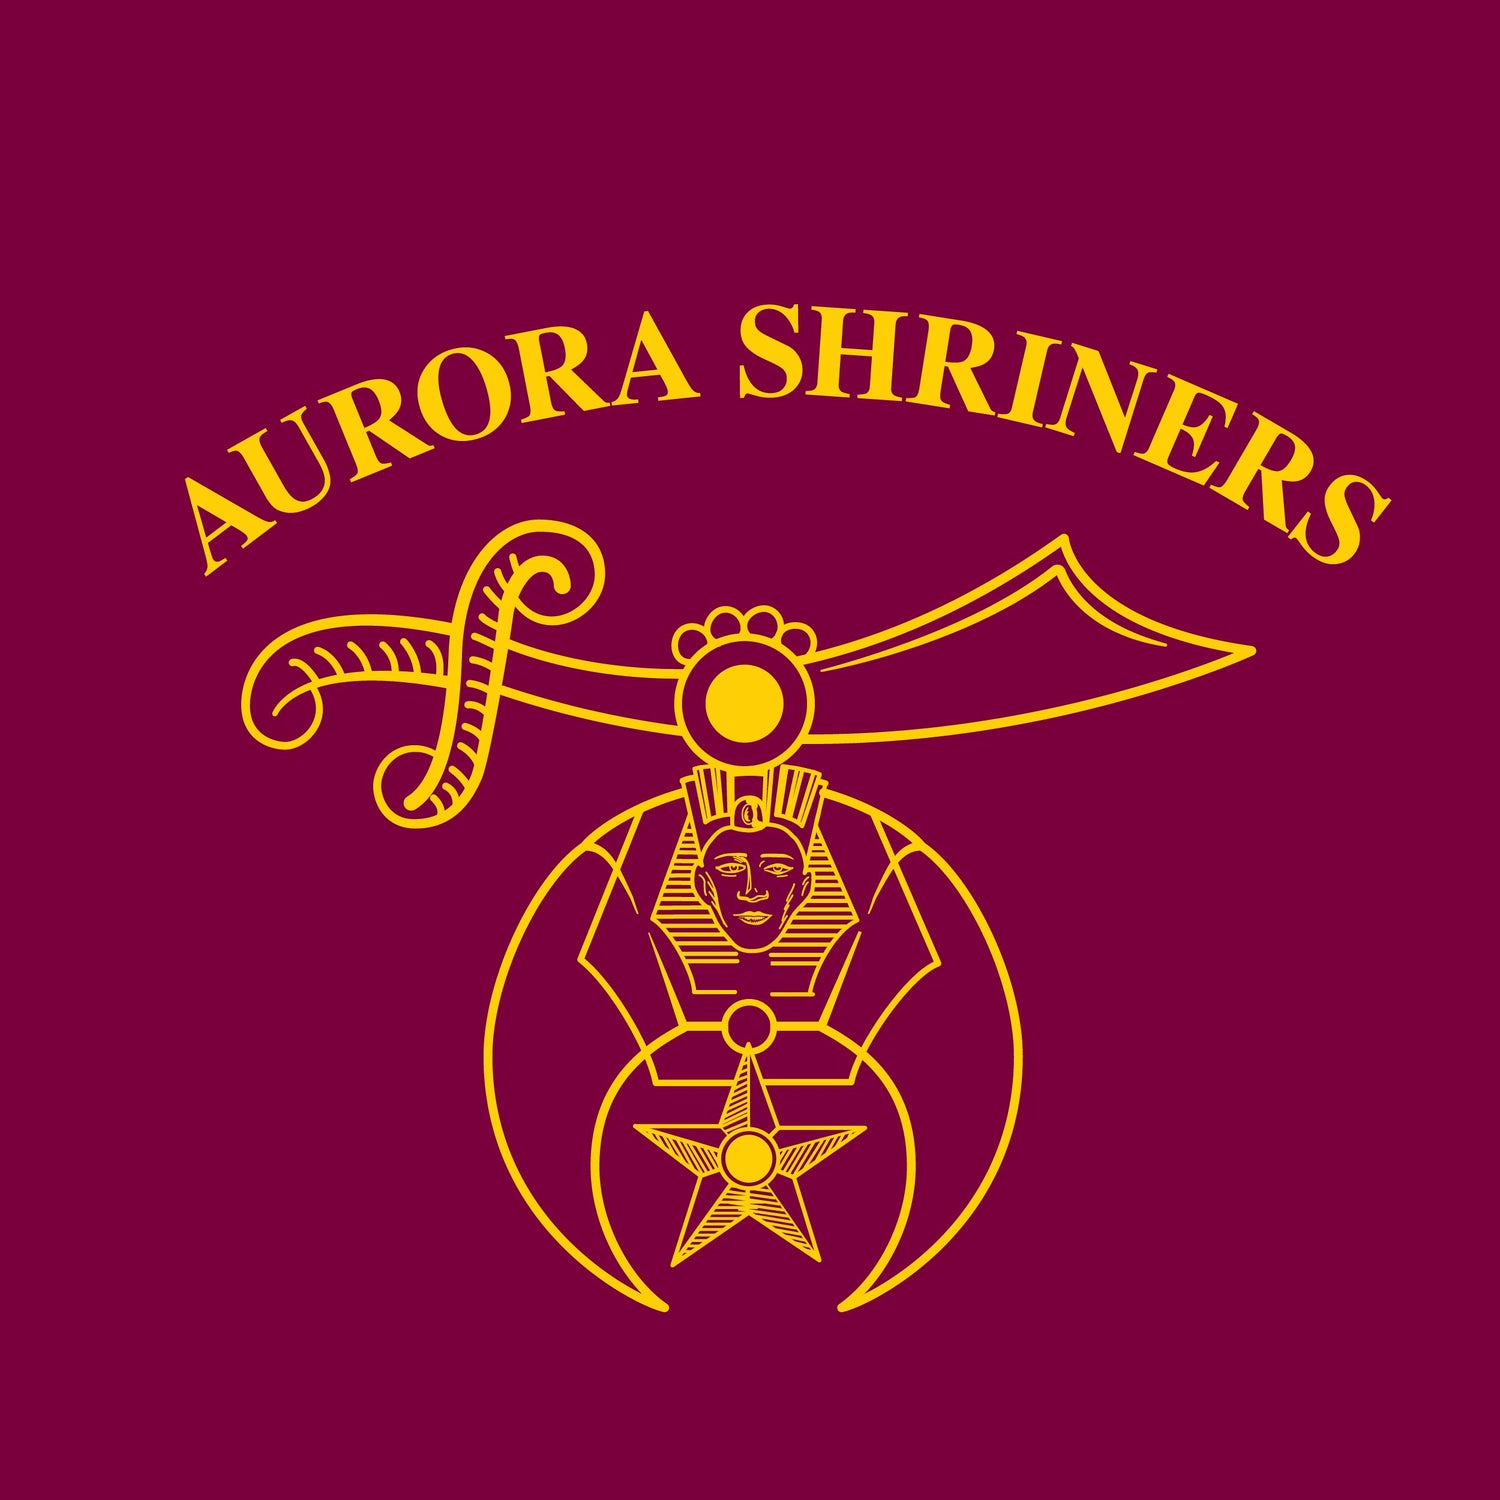 Aurora Area Shrine Club Steak Fry OV - Medinah Shriners